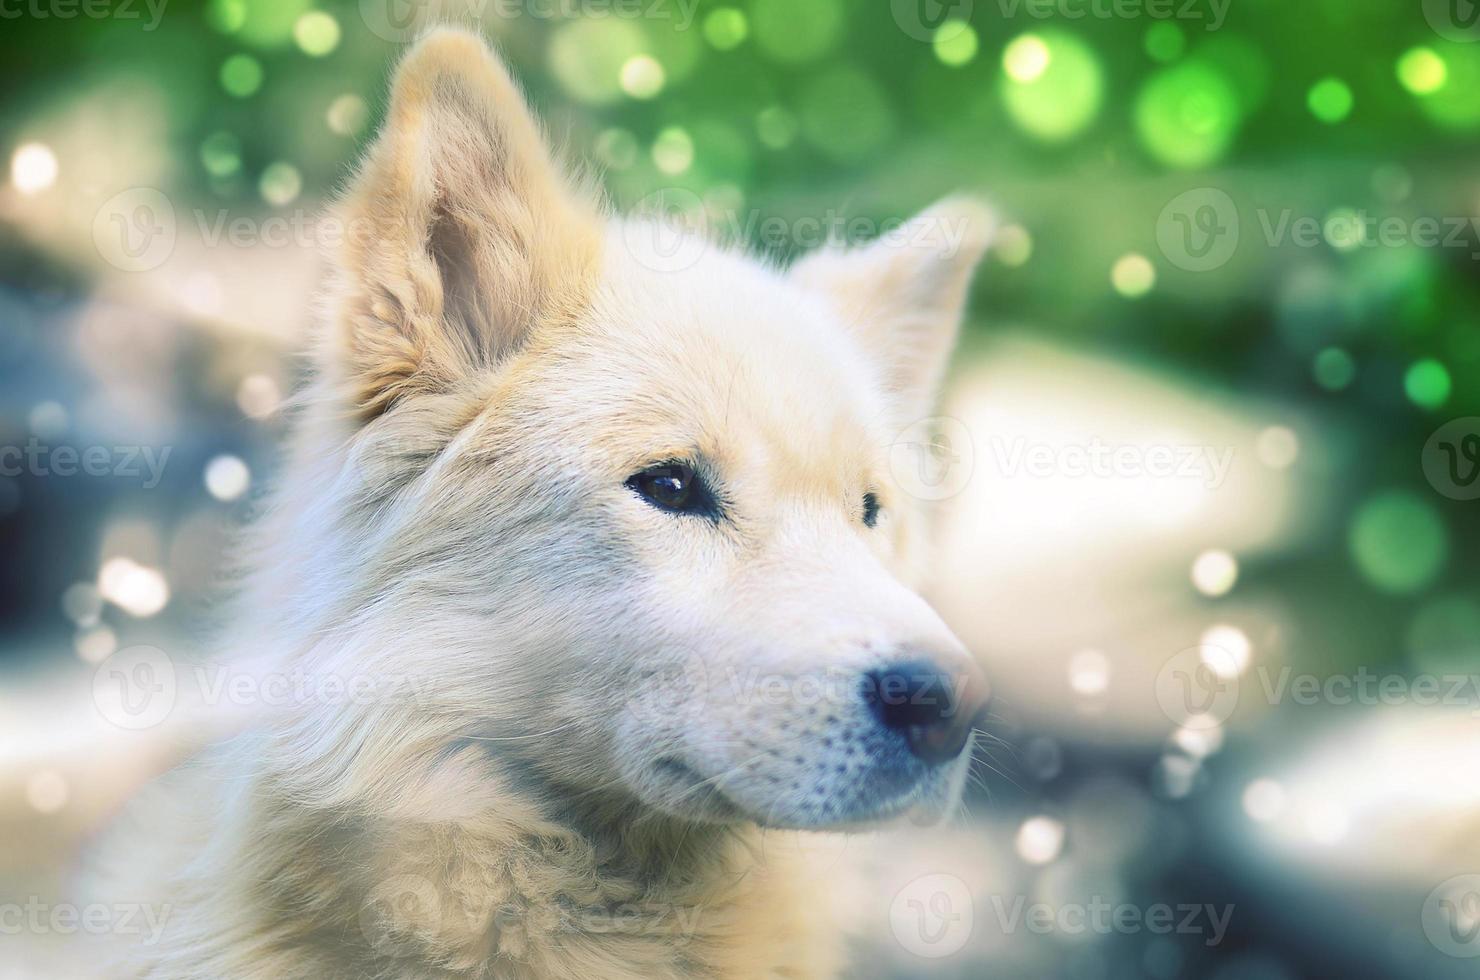 cane husky samoiedo siberiano bianco con occhi eterocromici foto